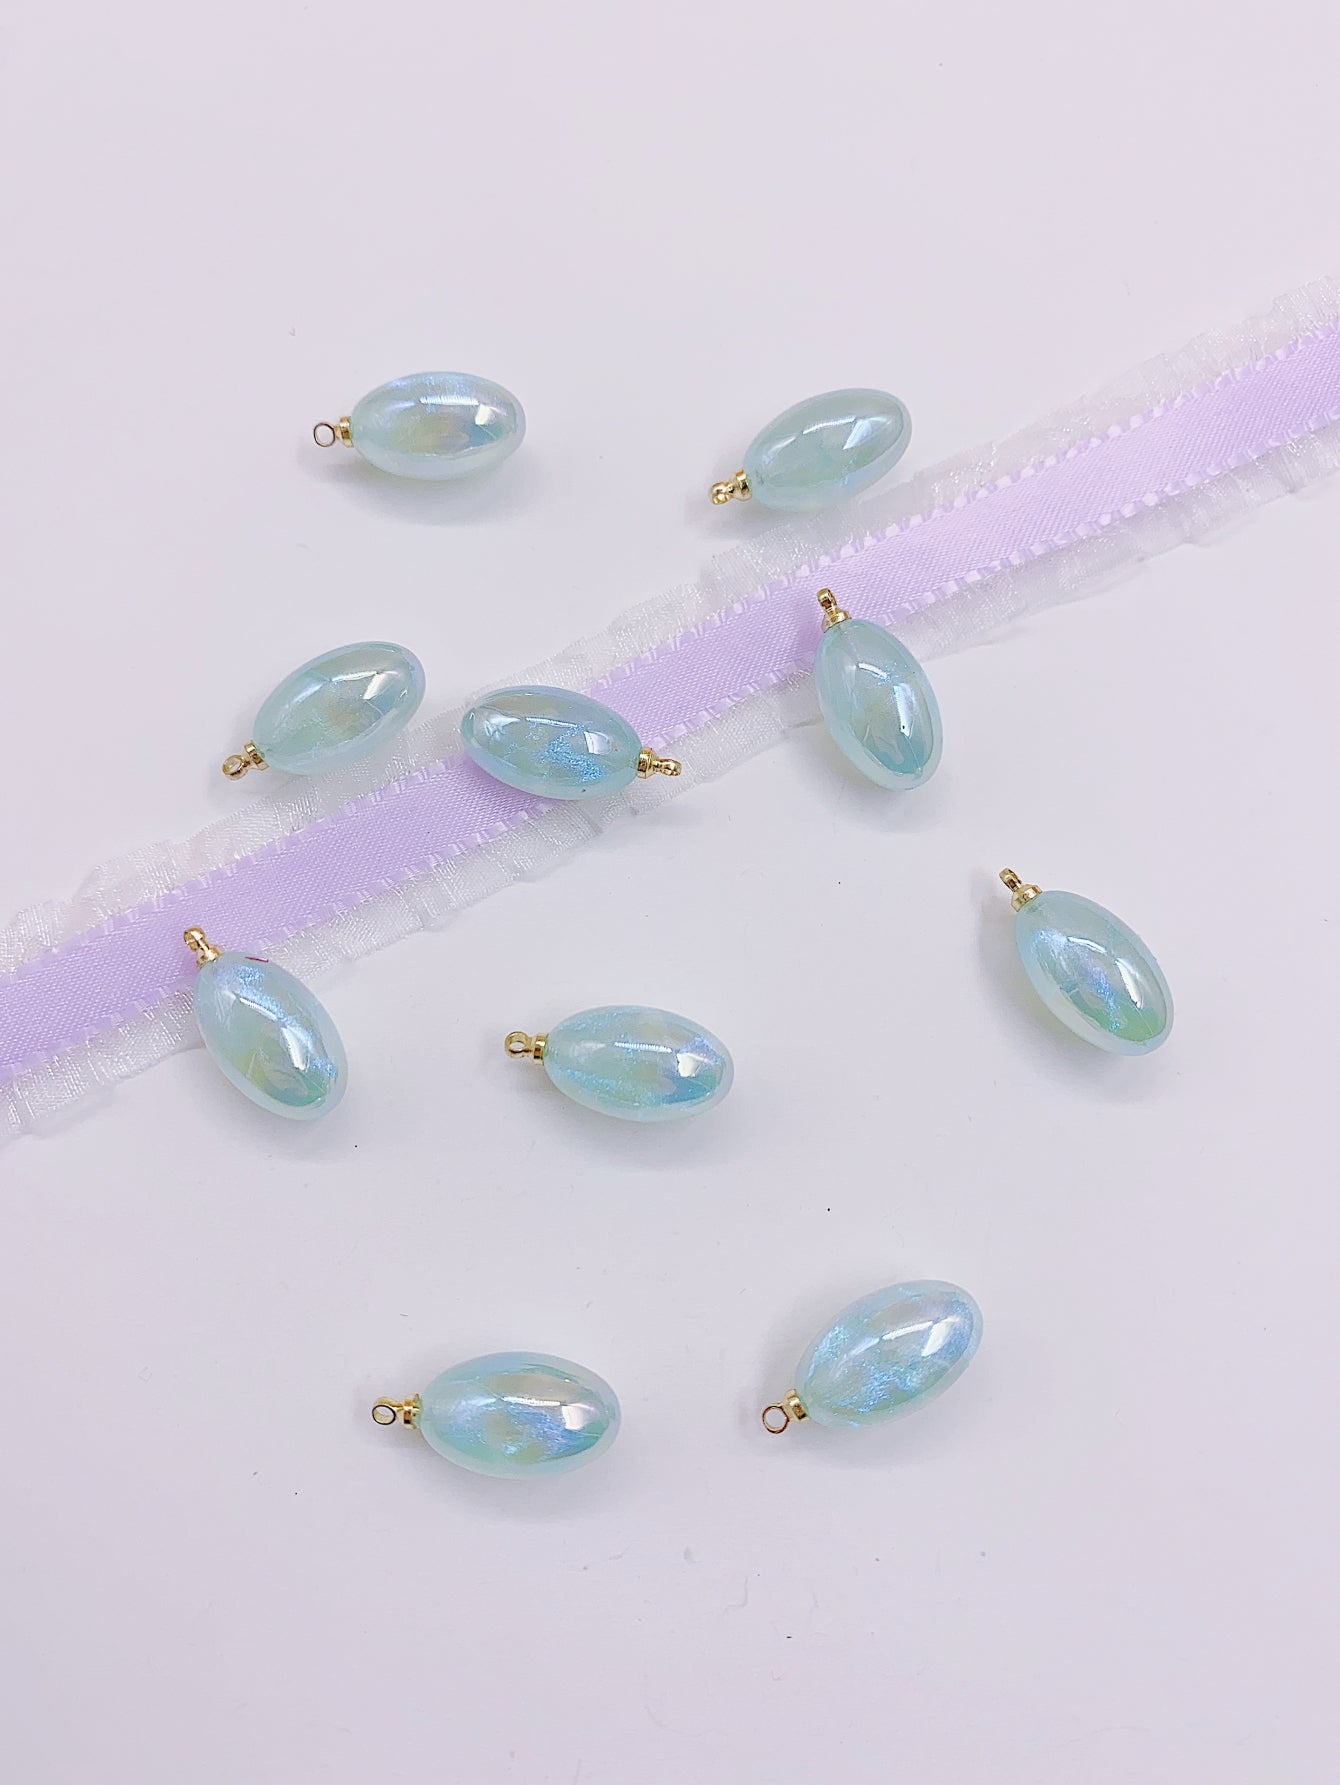 Fashion high-grade star color Bette string diy alloy pendant accessories loose bead pendant materials